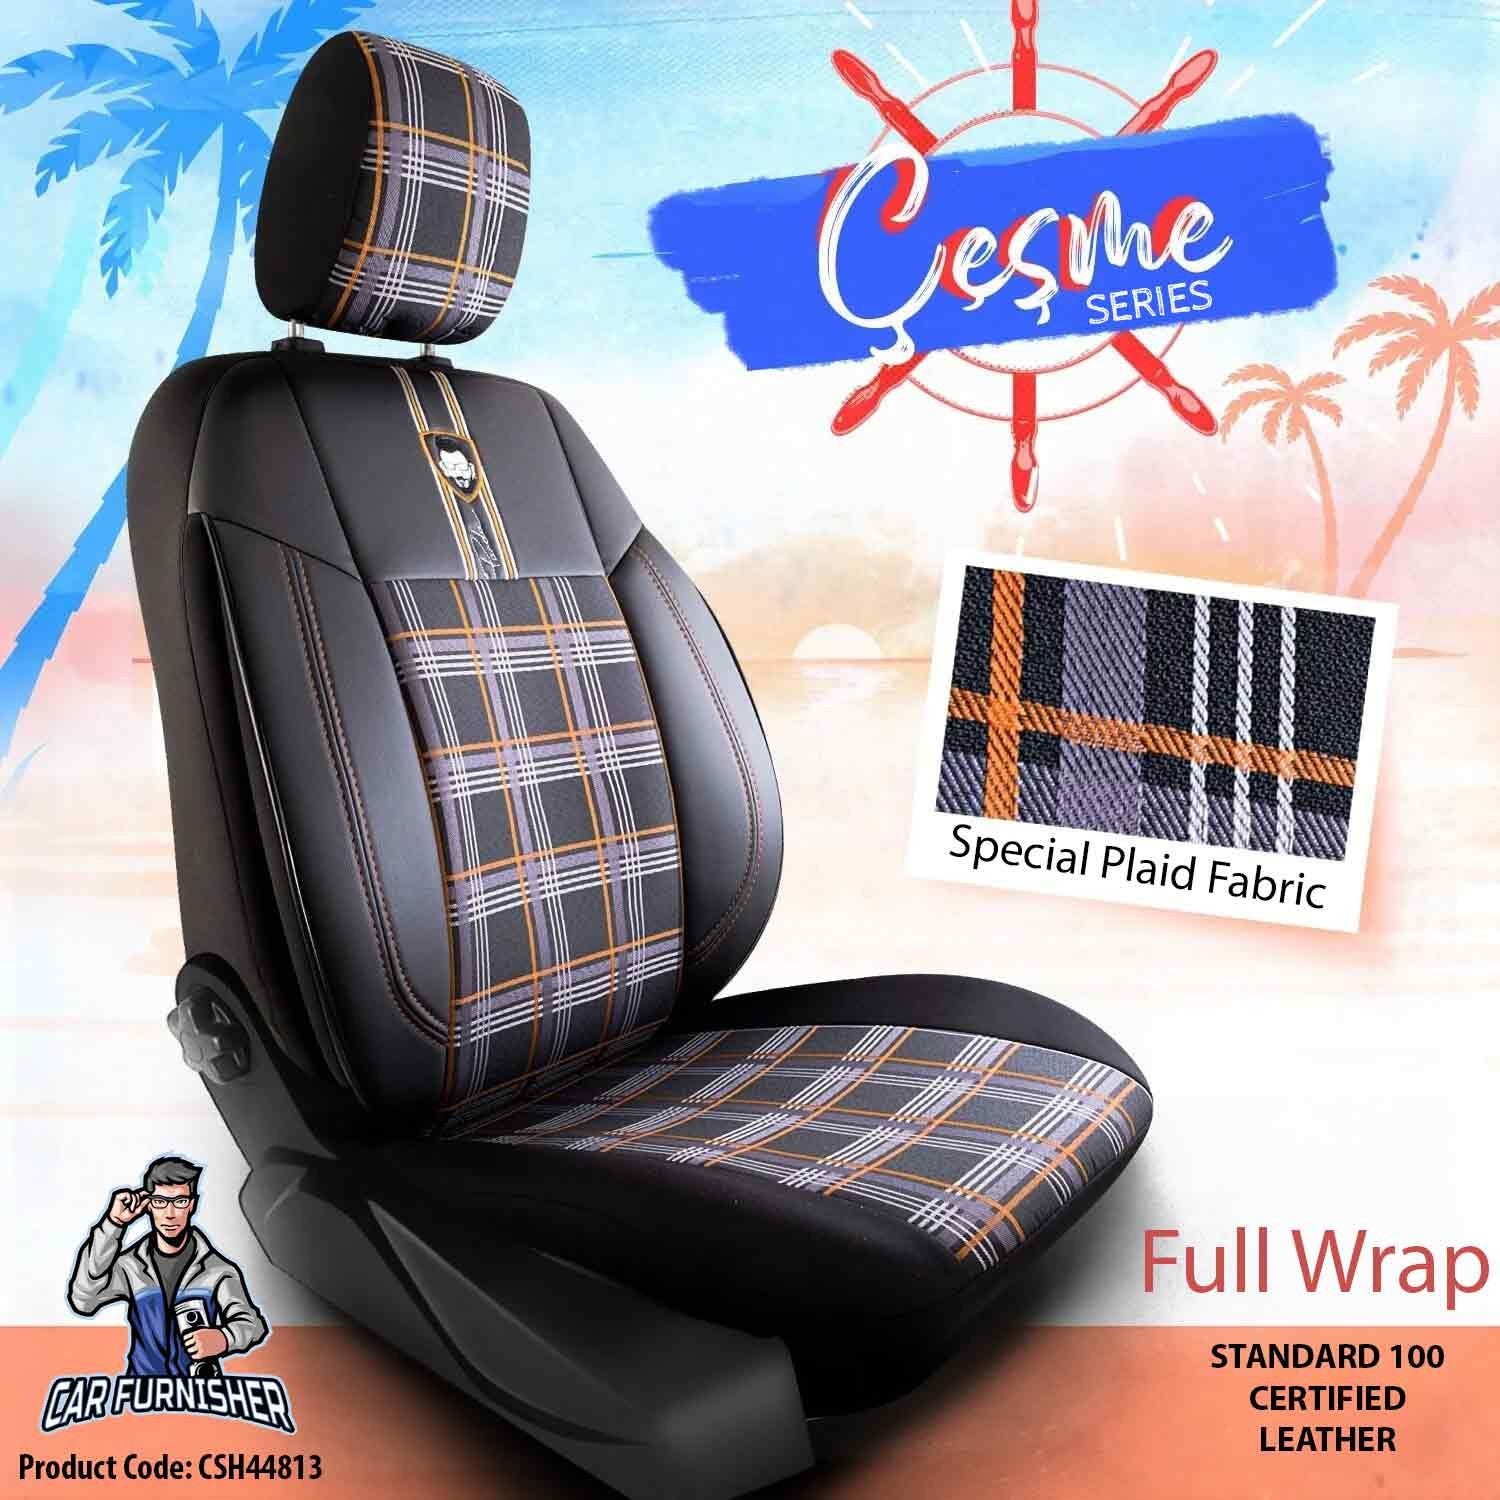 Luxury Car Seat Cover Set (4 Colors) | Cesme Series Orange Leather & Fabric